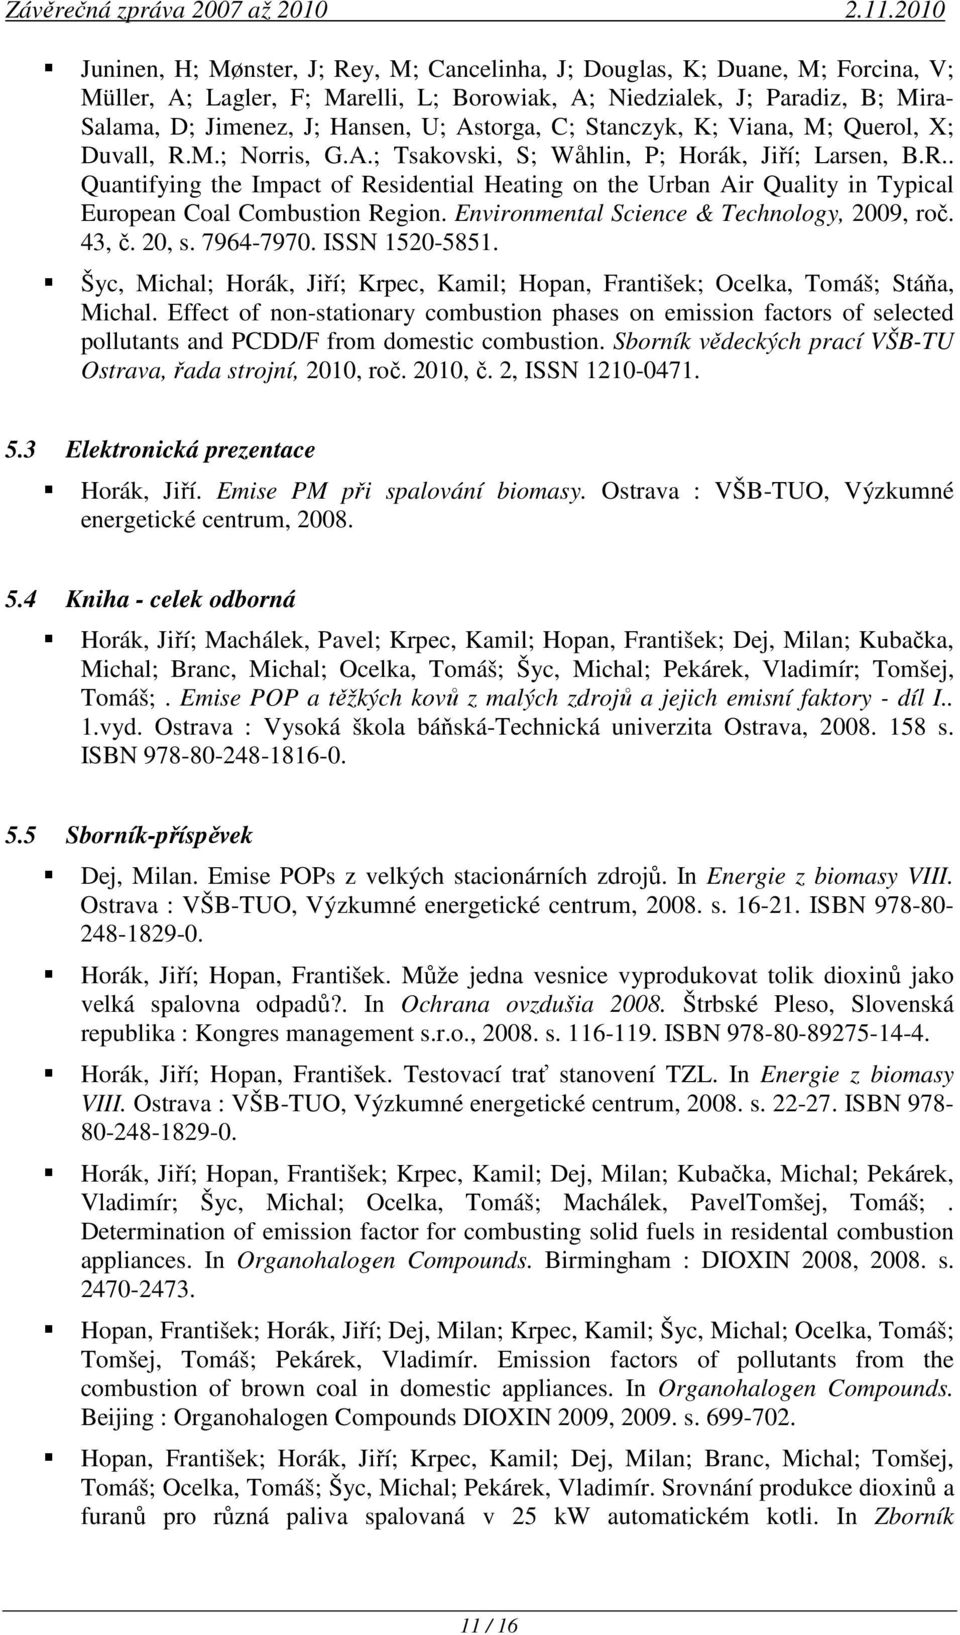 Environmental Science & Technology, 2009, roč. 43, č. 20, s. 7964-7970. ISSN 1520-5851. Šyc, Michal; Horák, Jiří; Krpec, Kamil; Hopan, František; Ocelka, Tomáš; Stáňa, Michal.